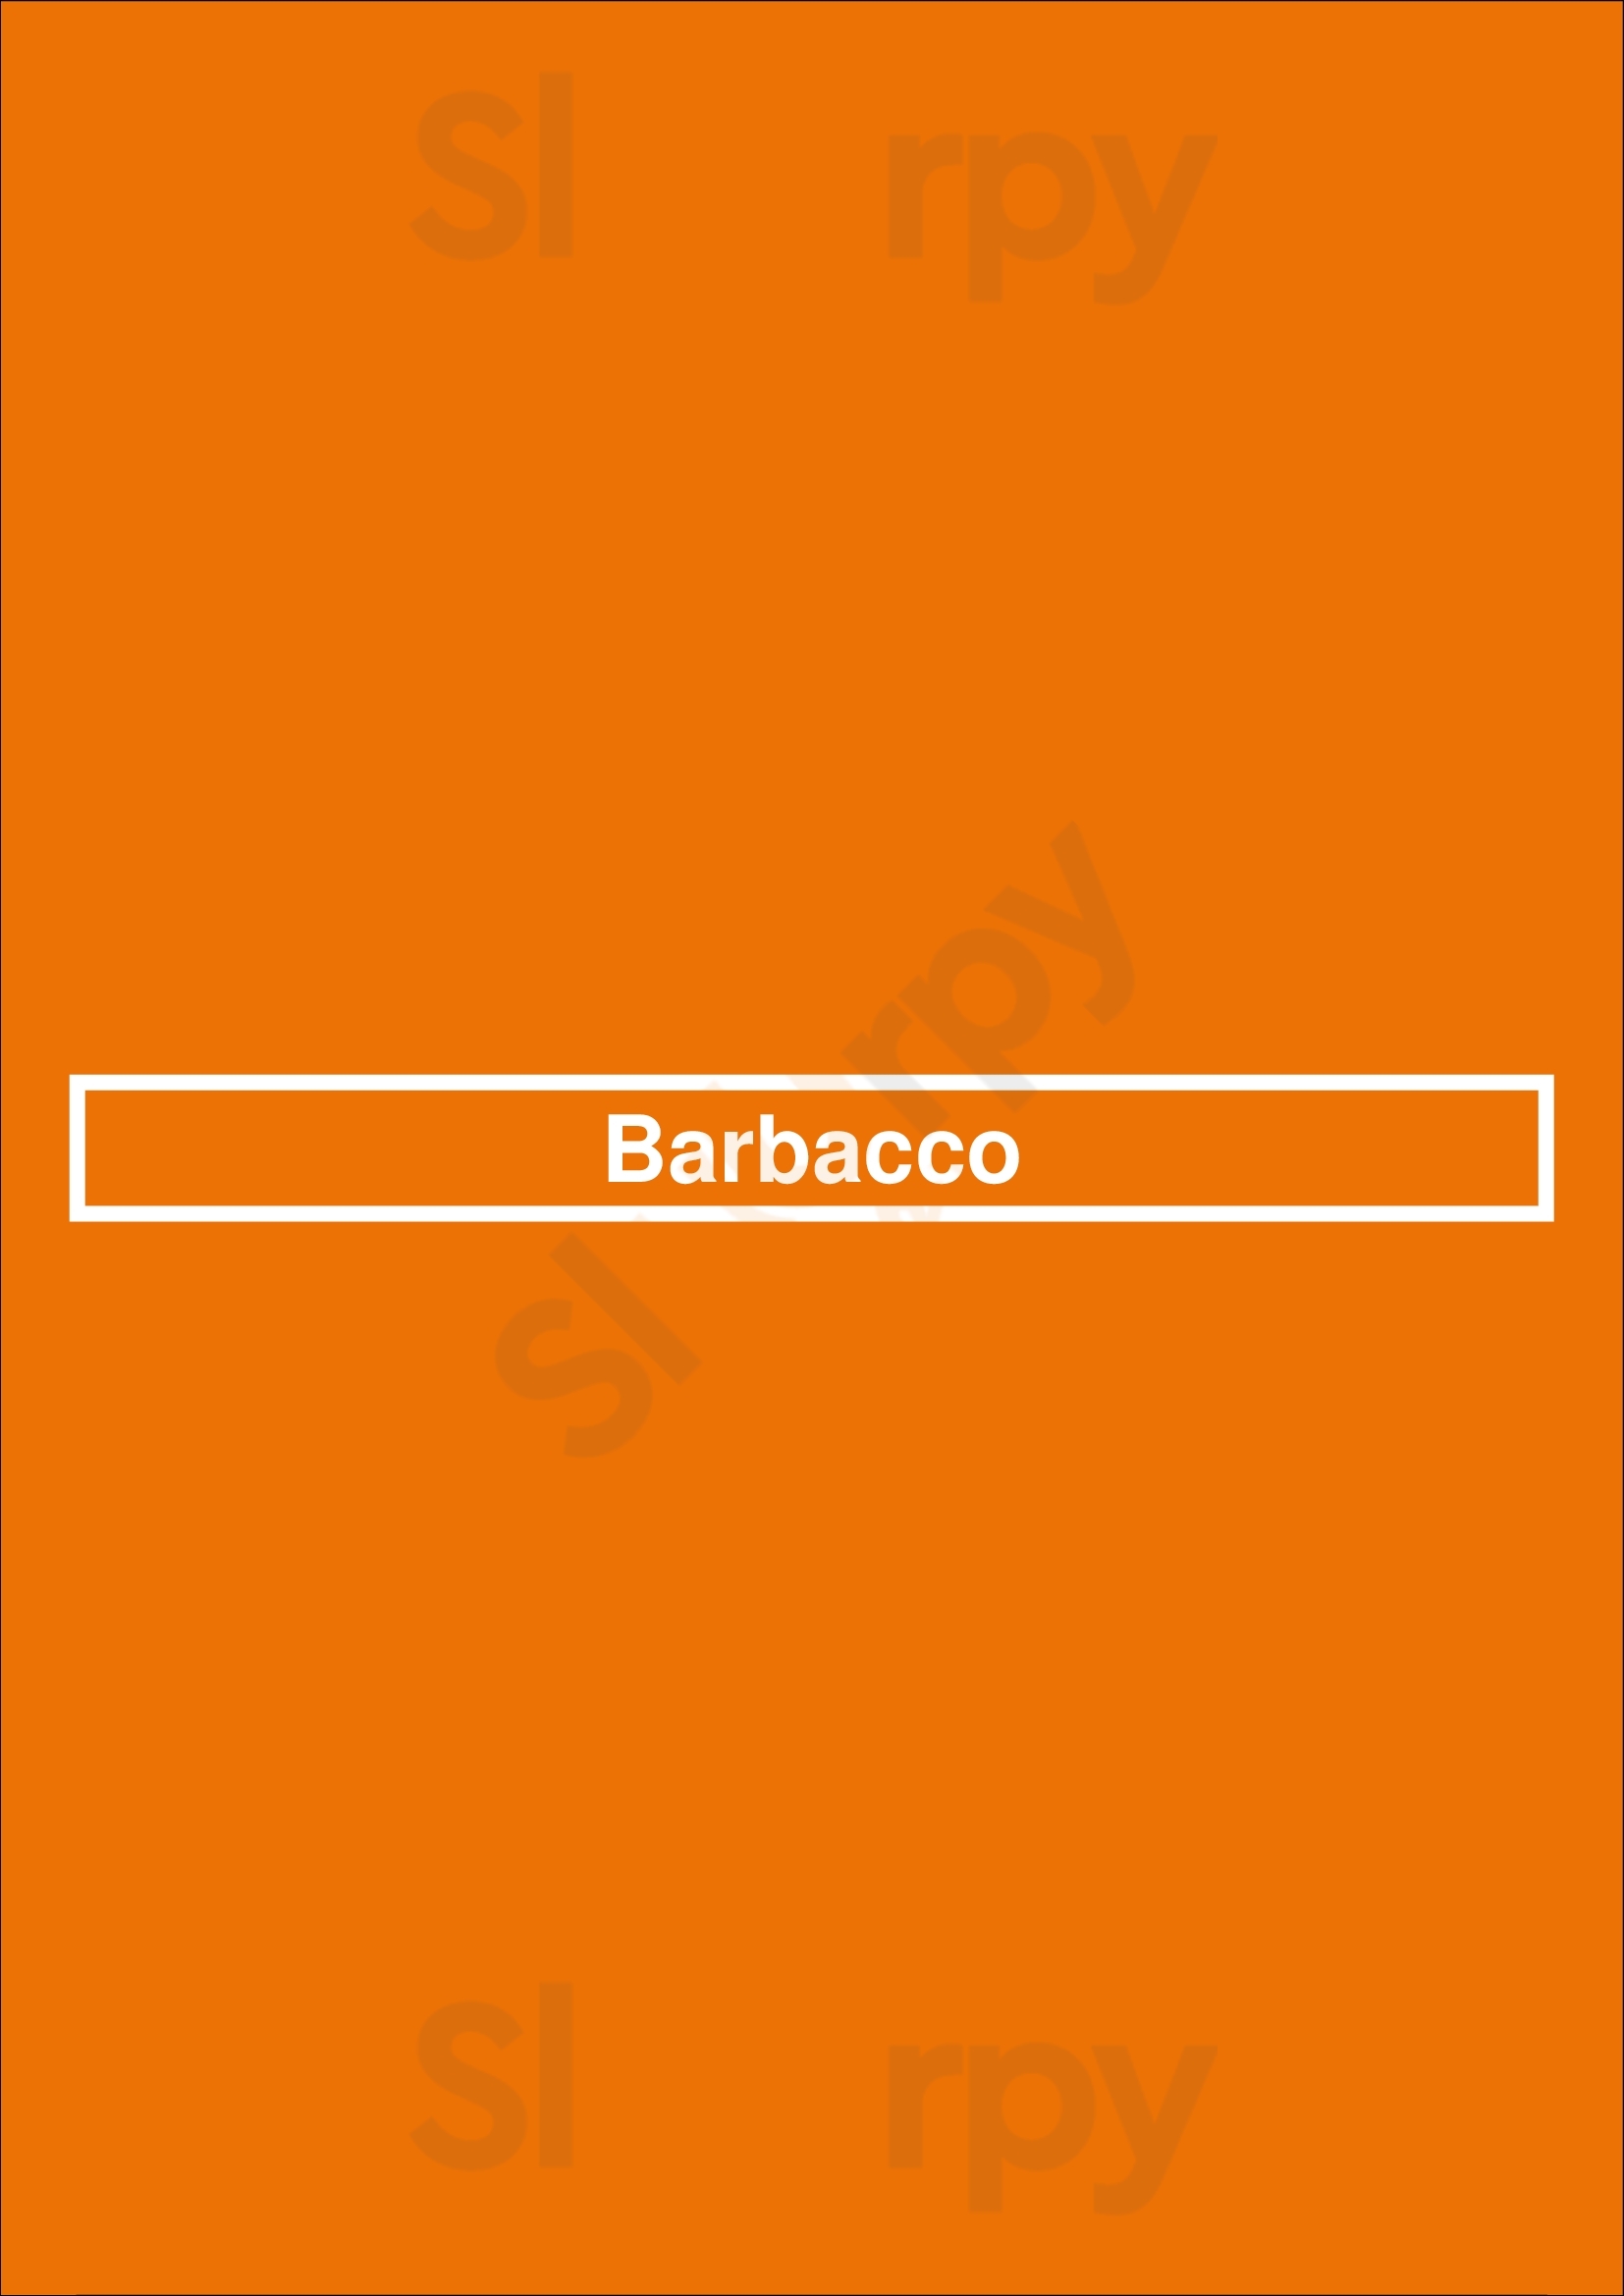 Barbacco San Francisco Menu - 1